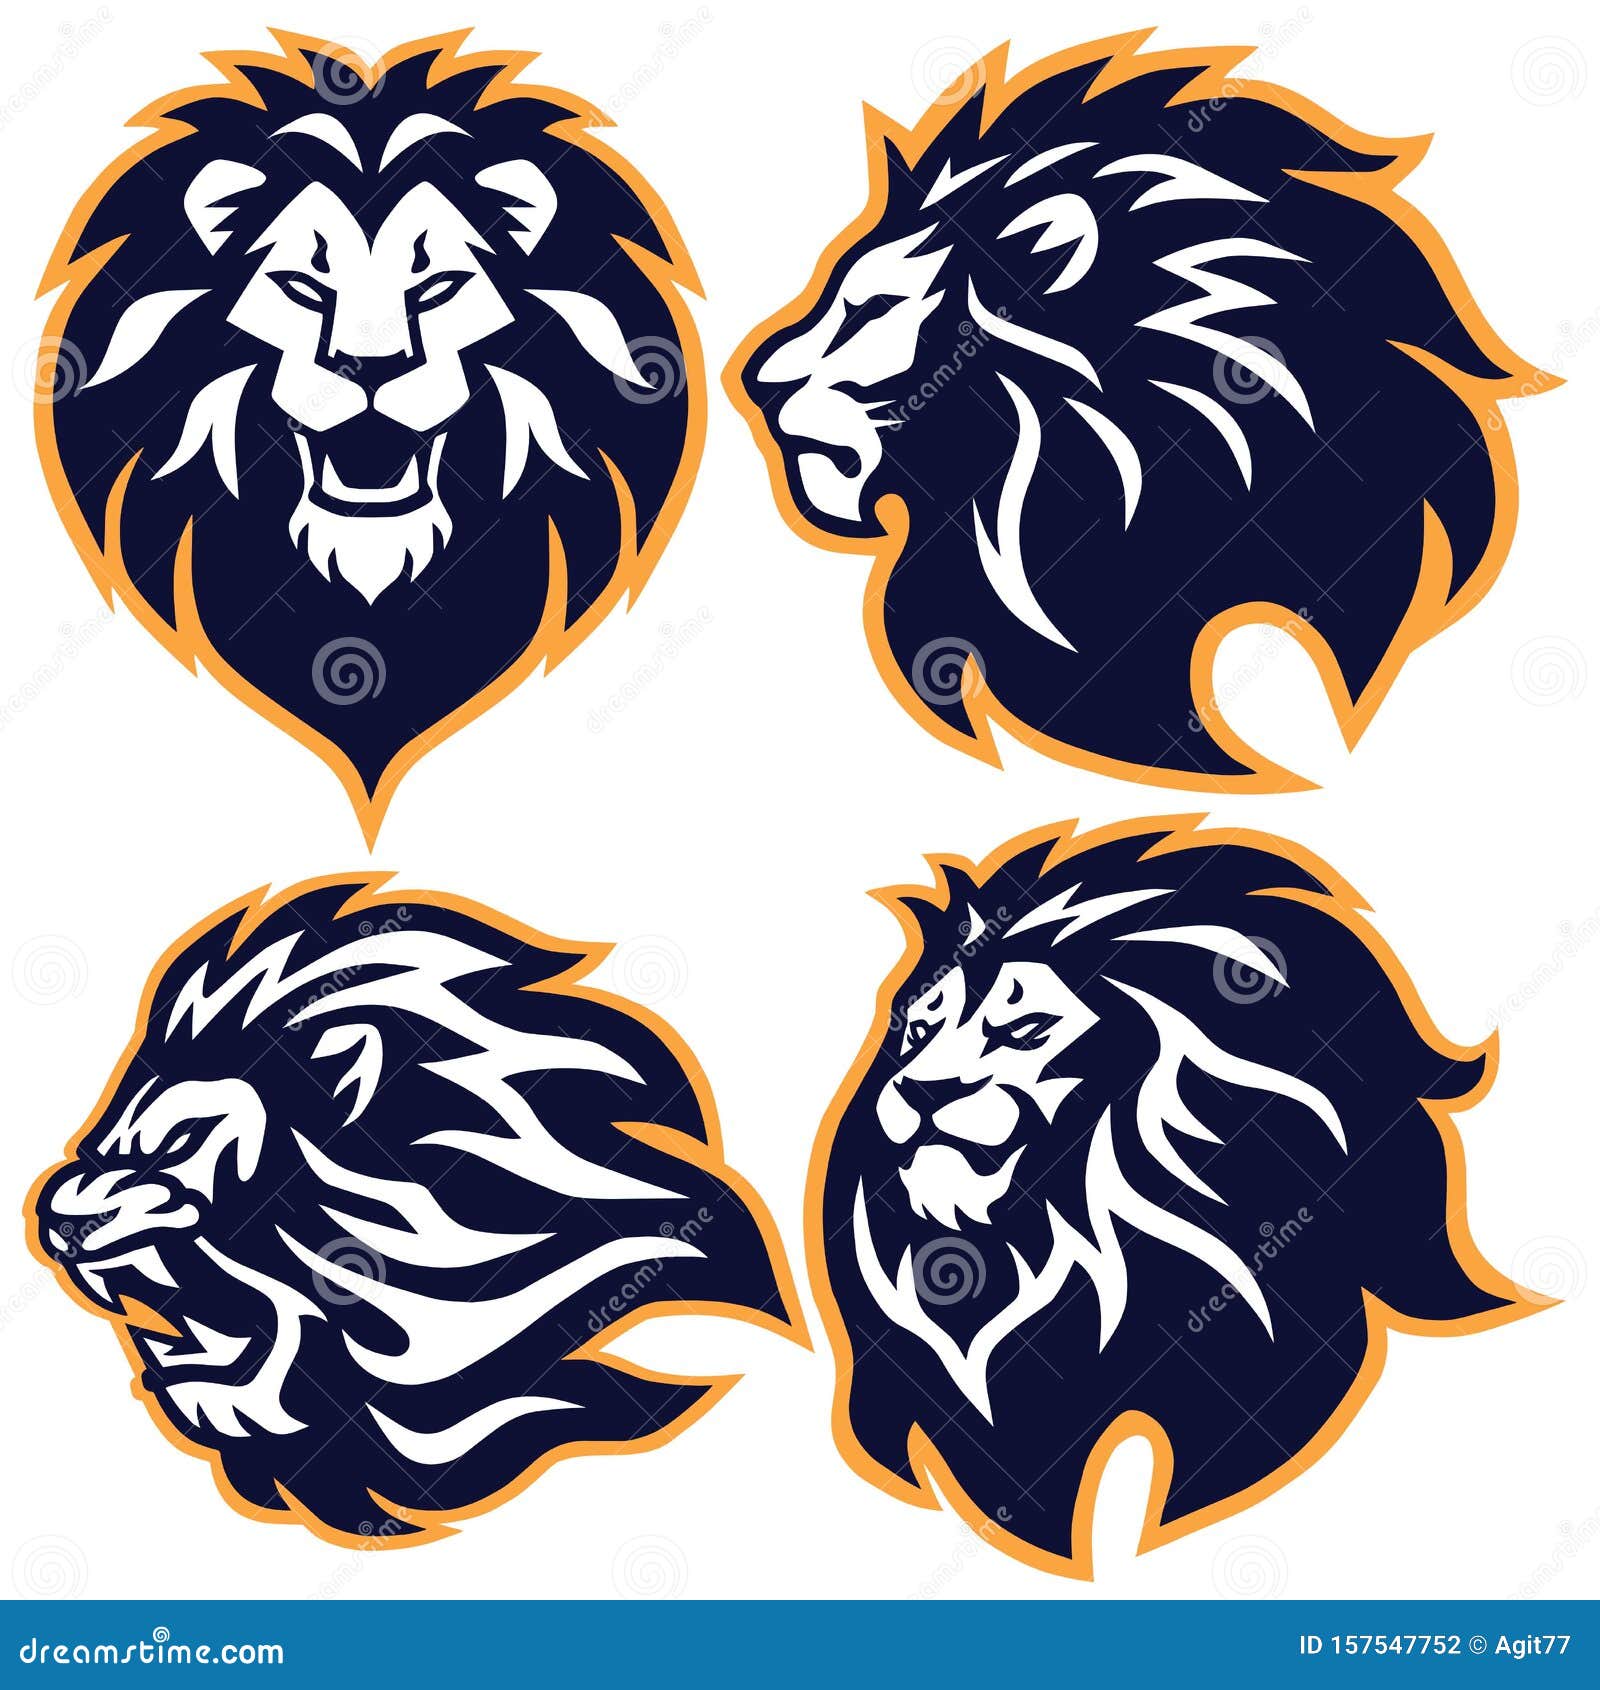 Lion Logo Set Collection. Premium Design Vector Mascot Illustration Pack  Stock Vector - Illustration of badge, identity: 157547752